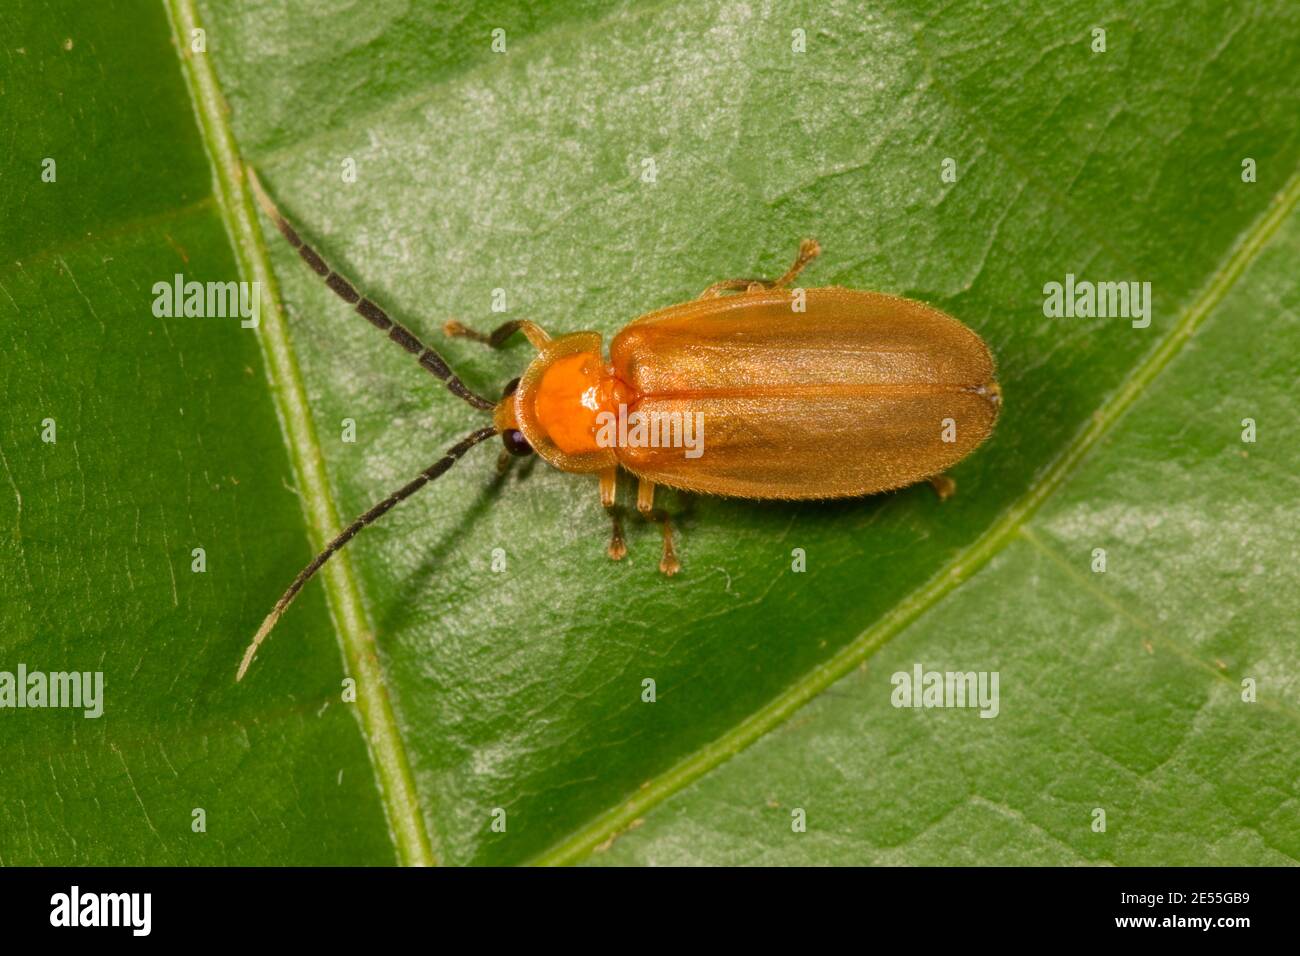 Firefly no identificado, Lampyridae. Diurnal. Longitud 10 mm. Foto de stock